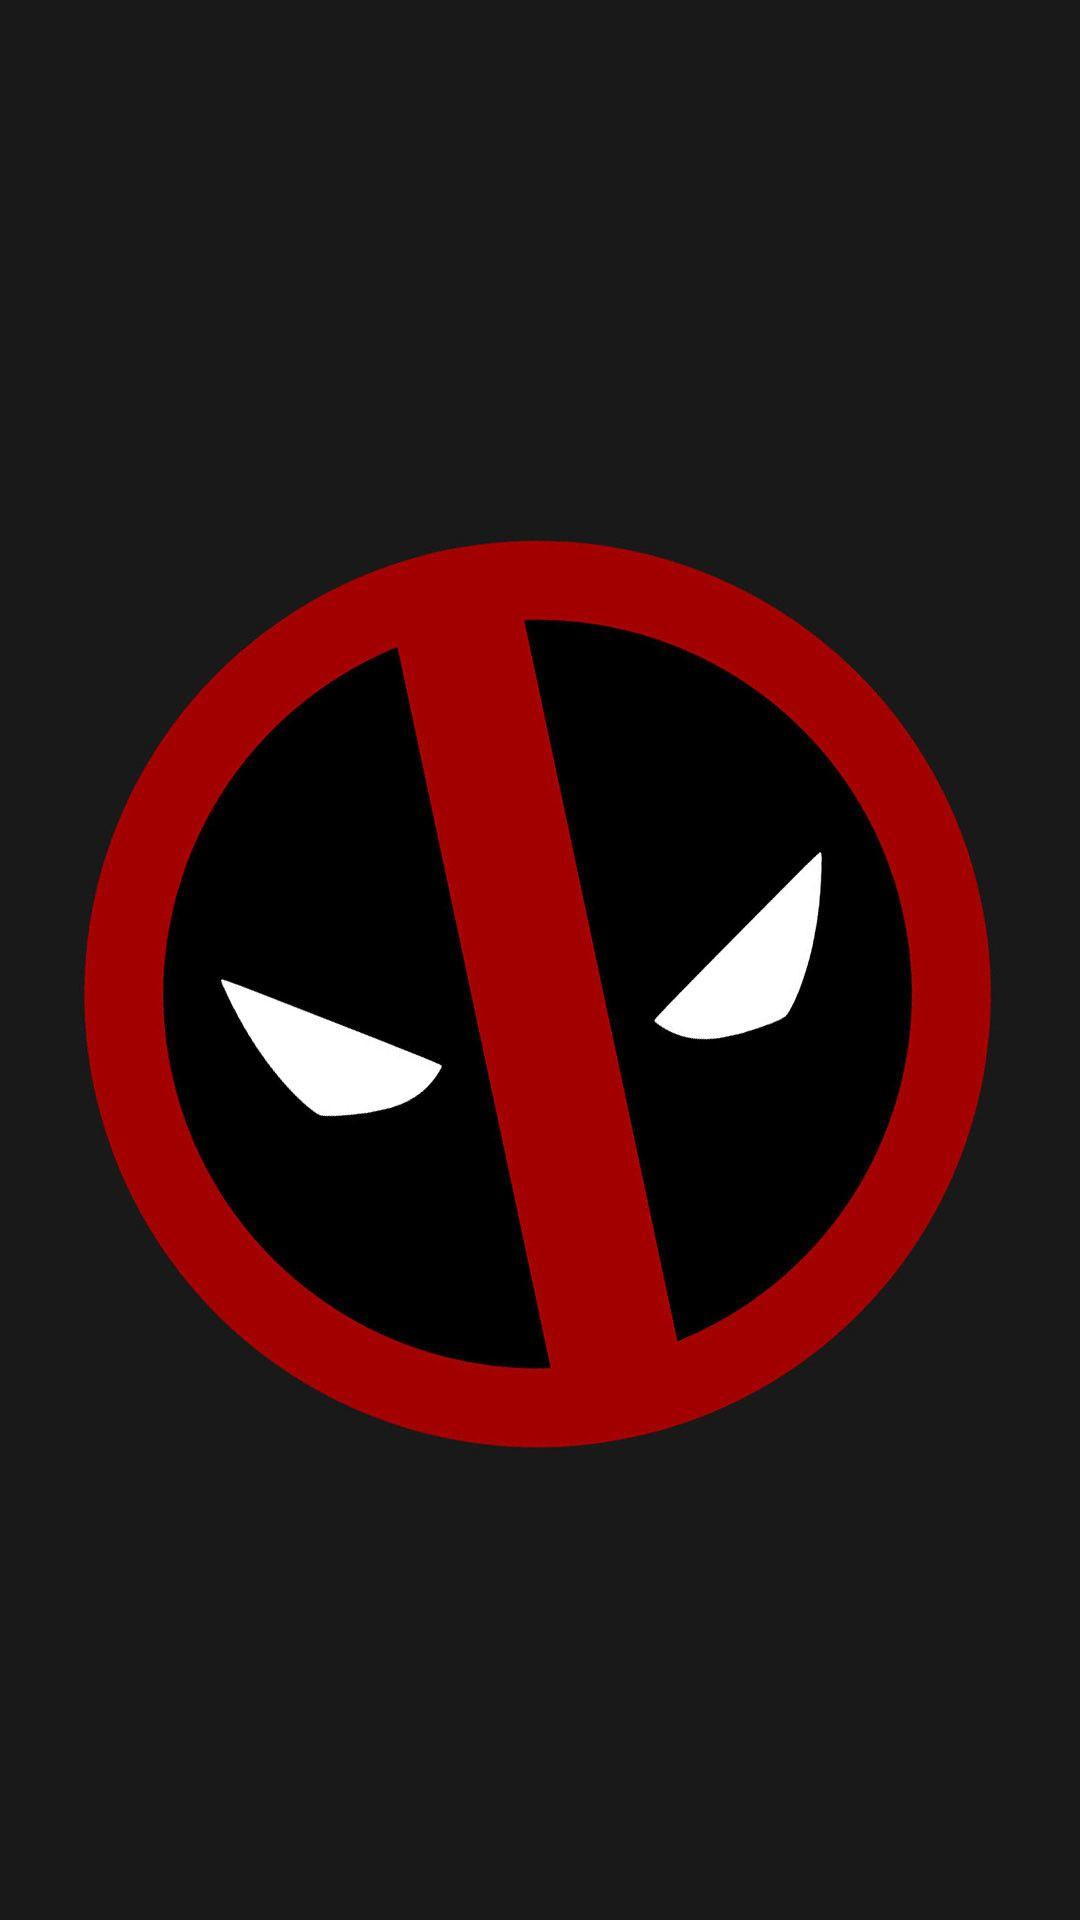 Deadpool Logo wallpaper image. Deadpool logo wallpaper